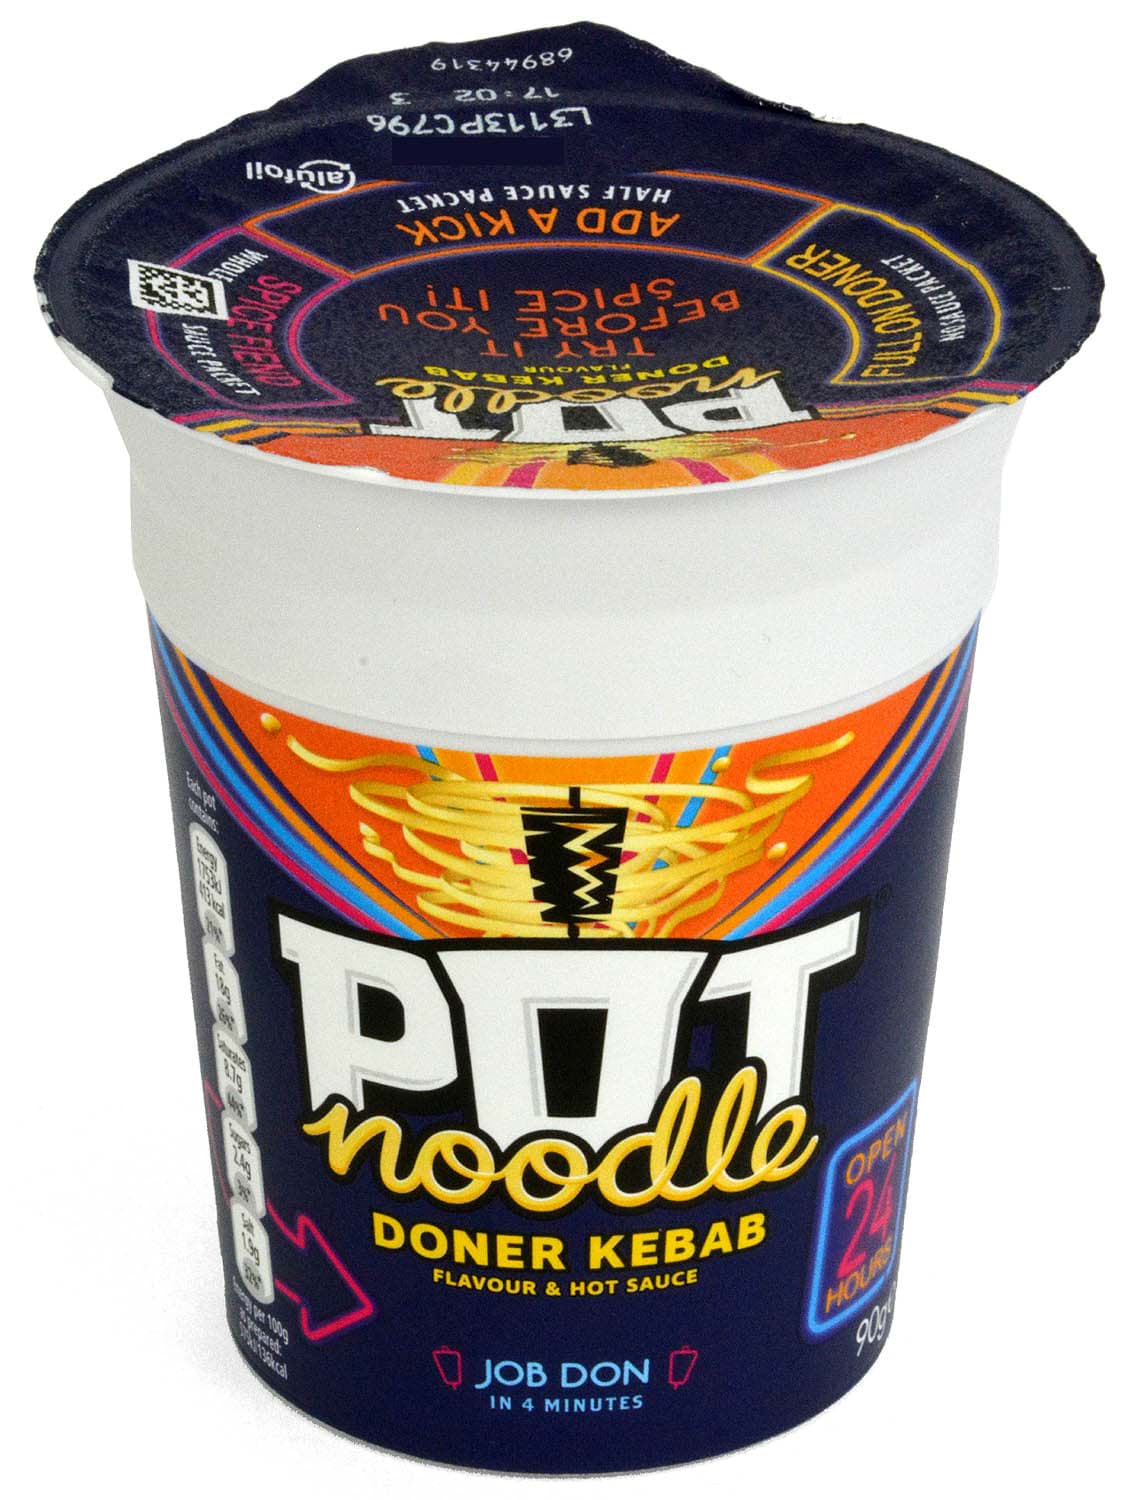 Picture of Pot Noodle Doner Kebab Flavour